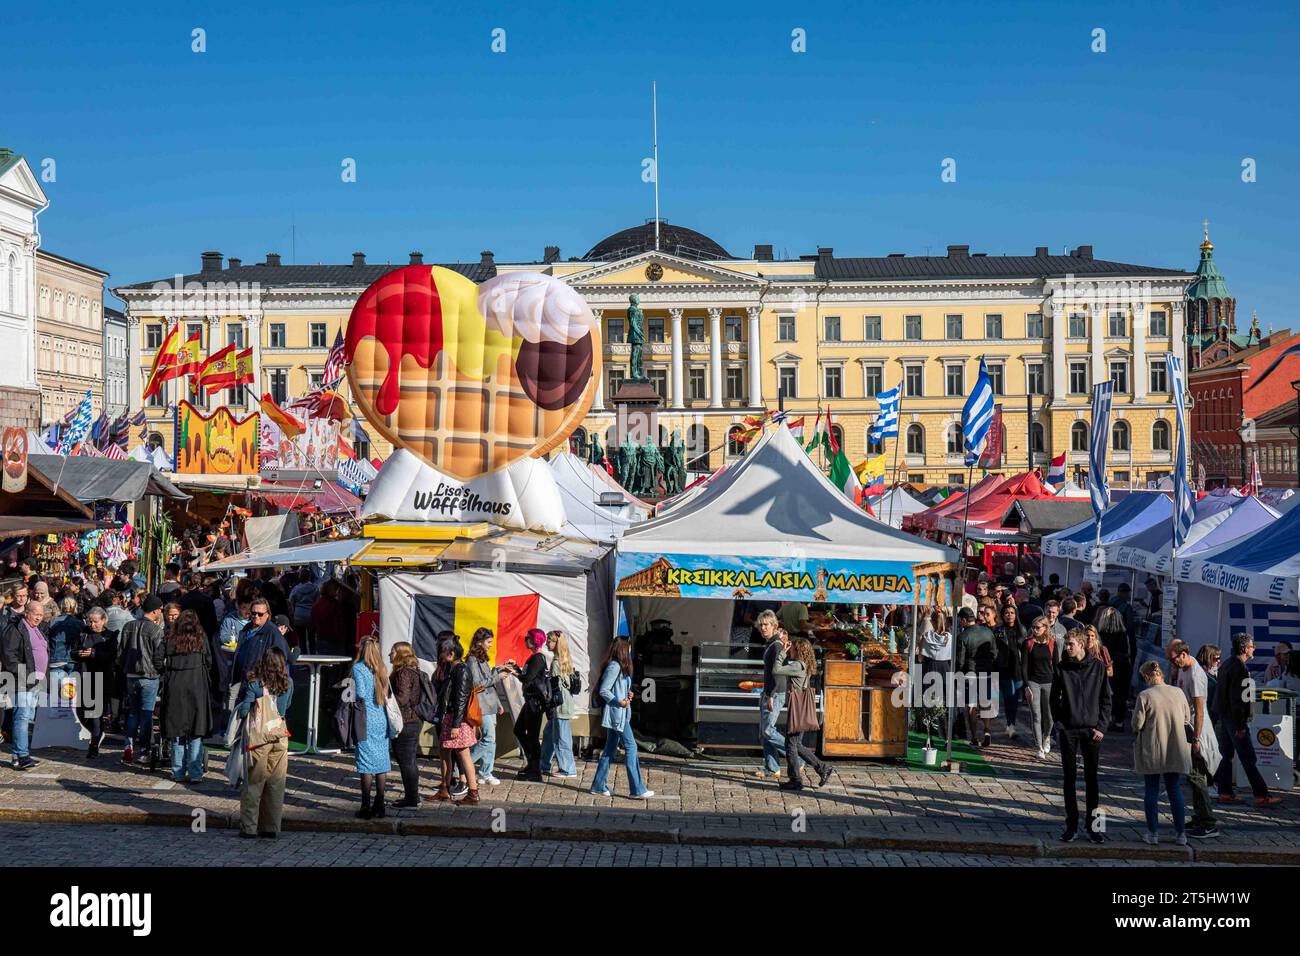 Kansainväliset suurmarkkinat o grande mercato internazionale in Piazza del Senato a Helsinki, Finlandia Foto Stock